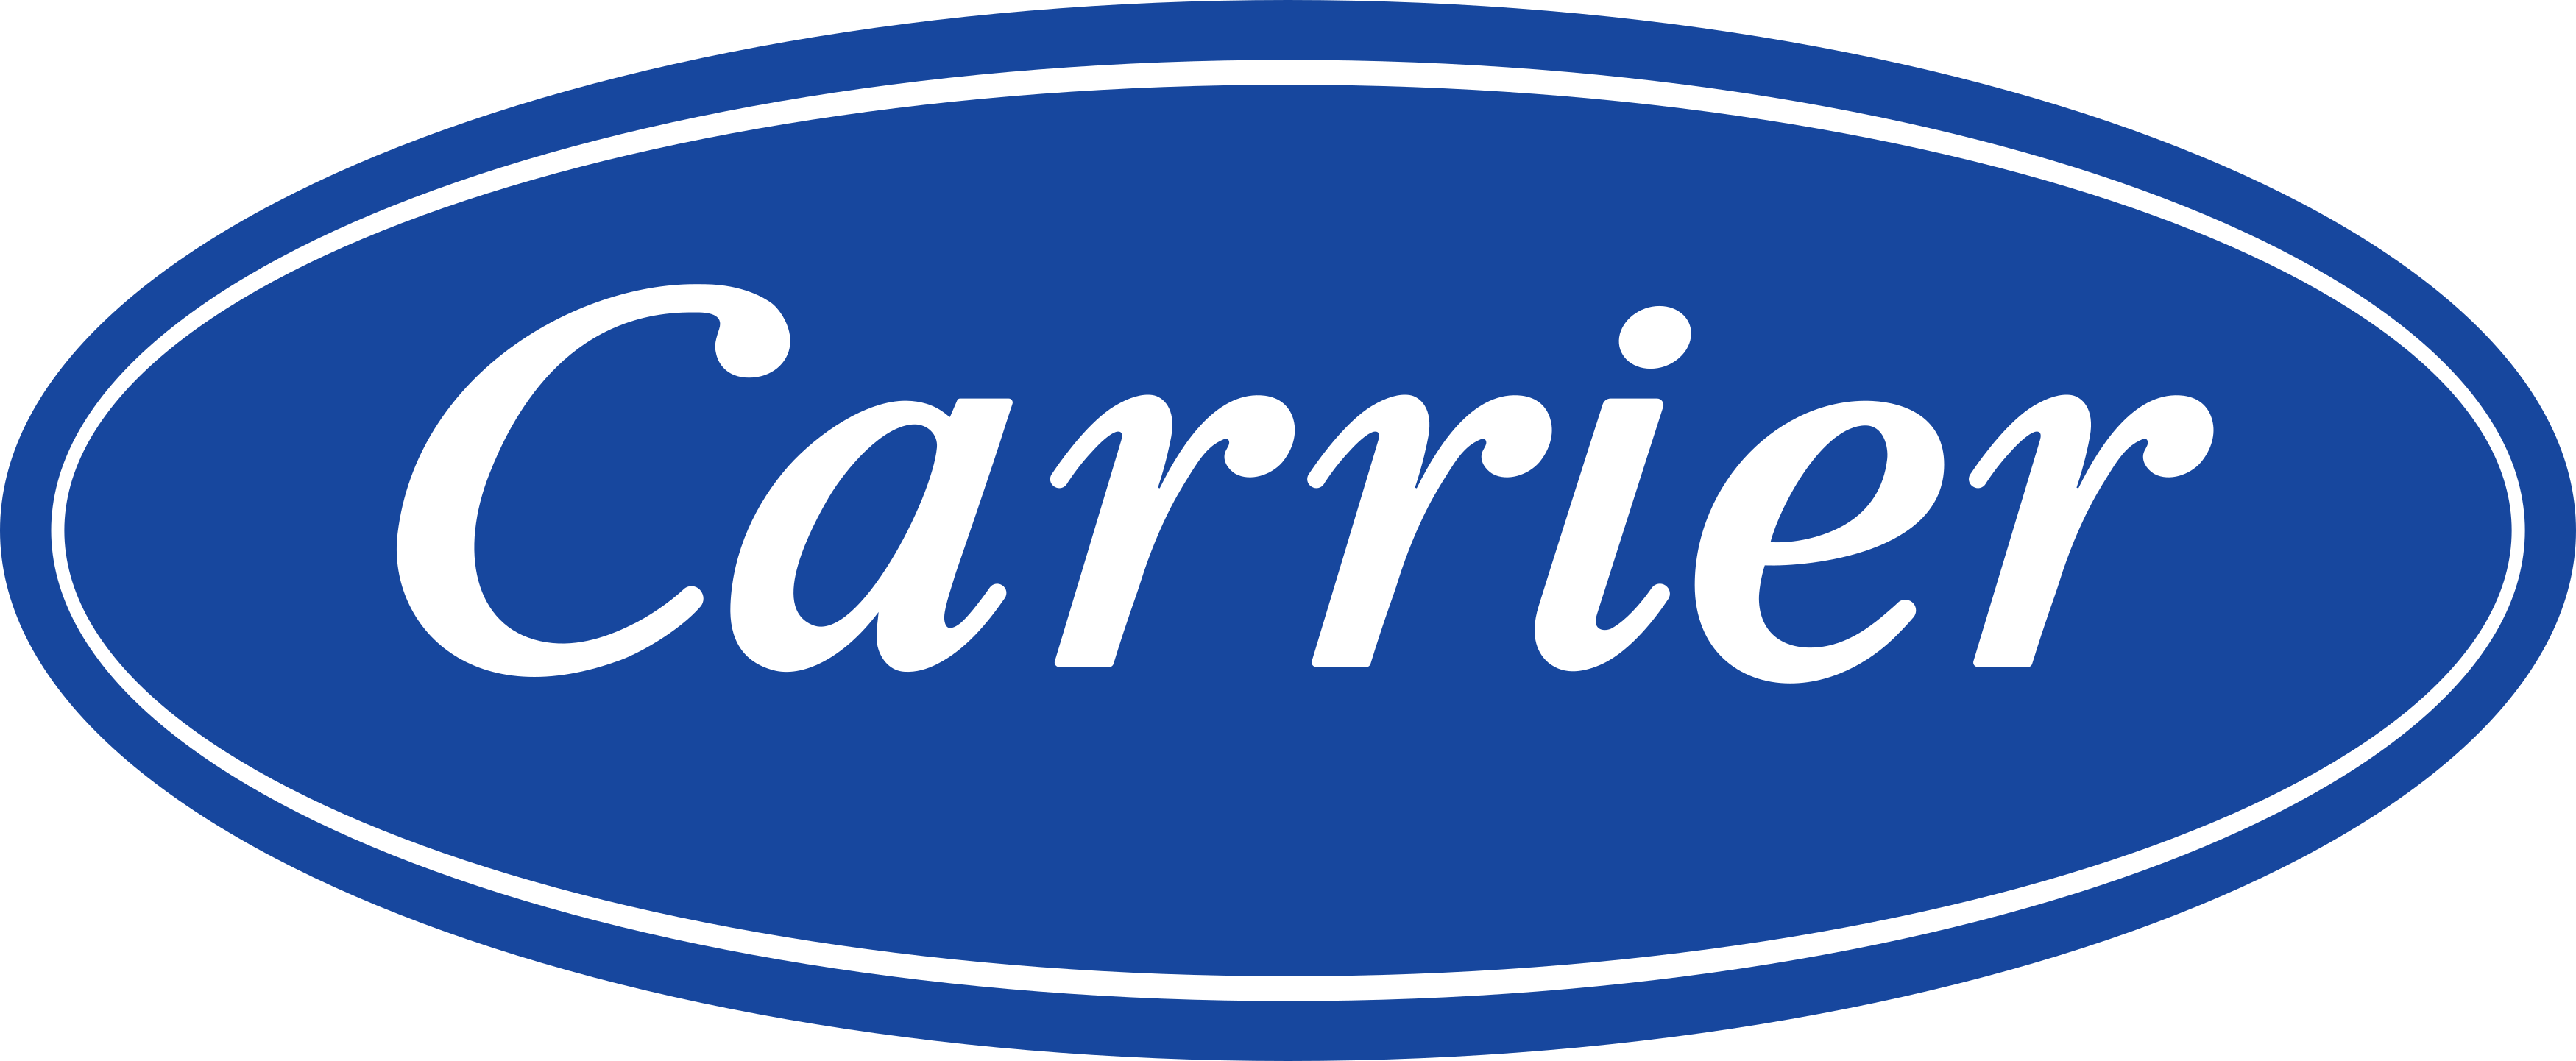 Carrier Global Corporation logo